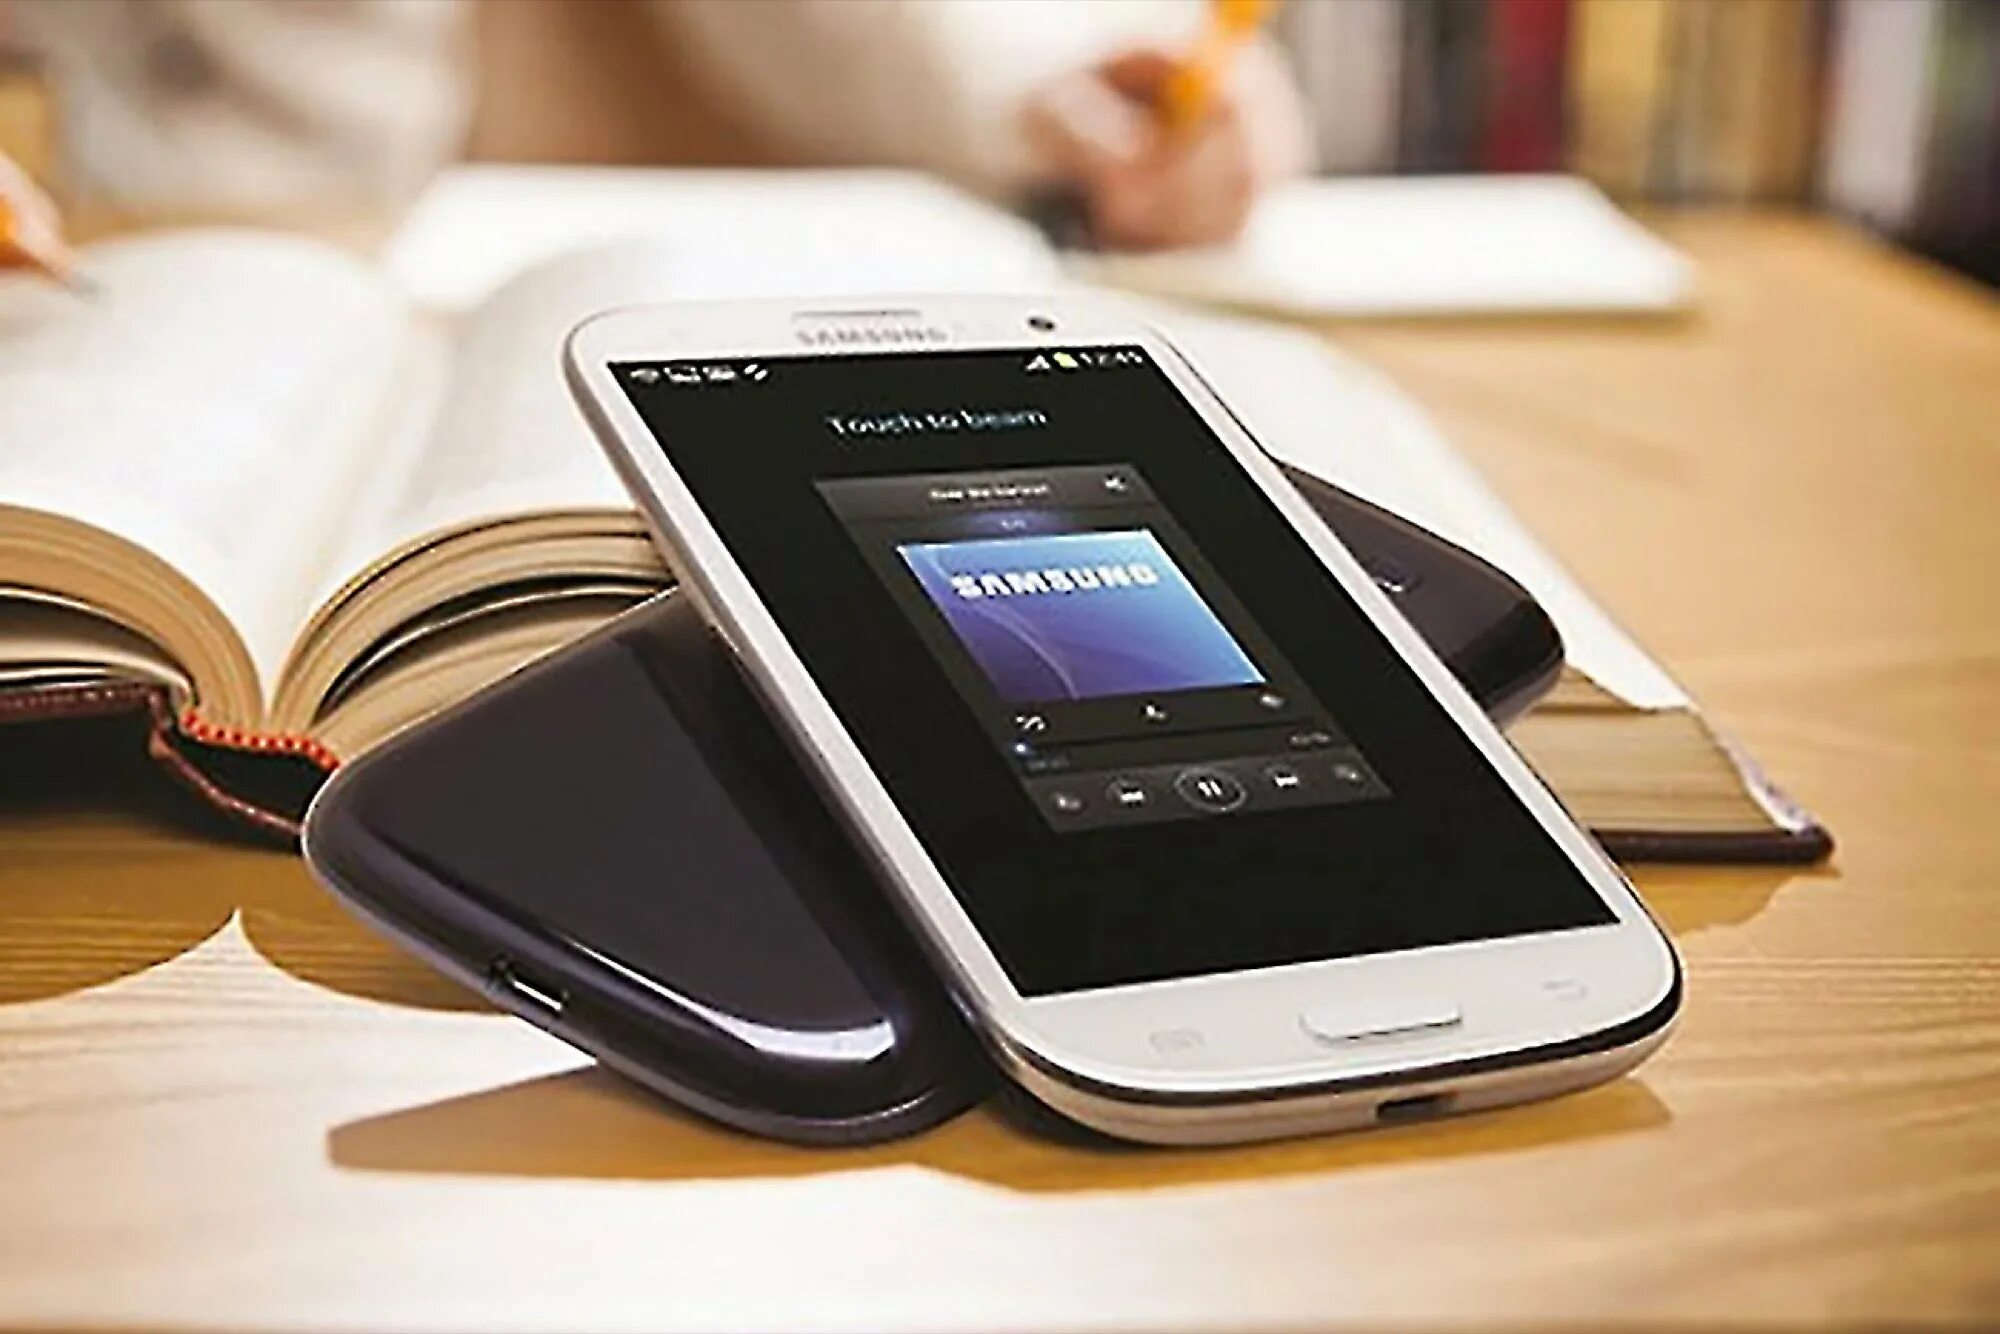 Самсунг Galaxy s3 флагман. Смартфон на столе. Мобильник на столе. Смартфон и планшет на столе. Рабочий стол на моем телефоне